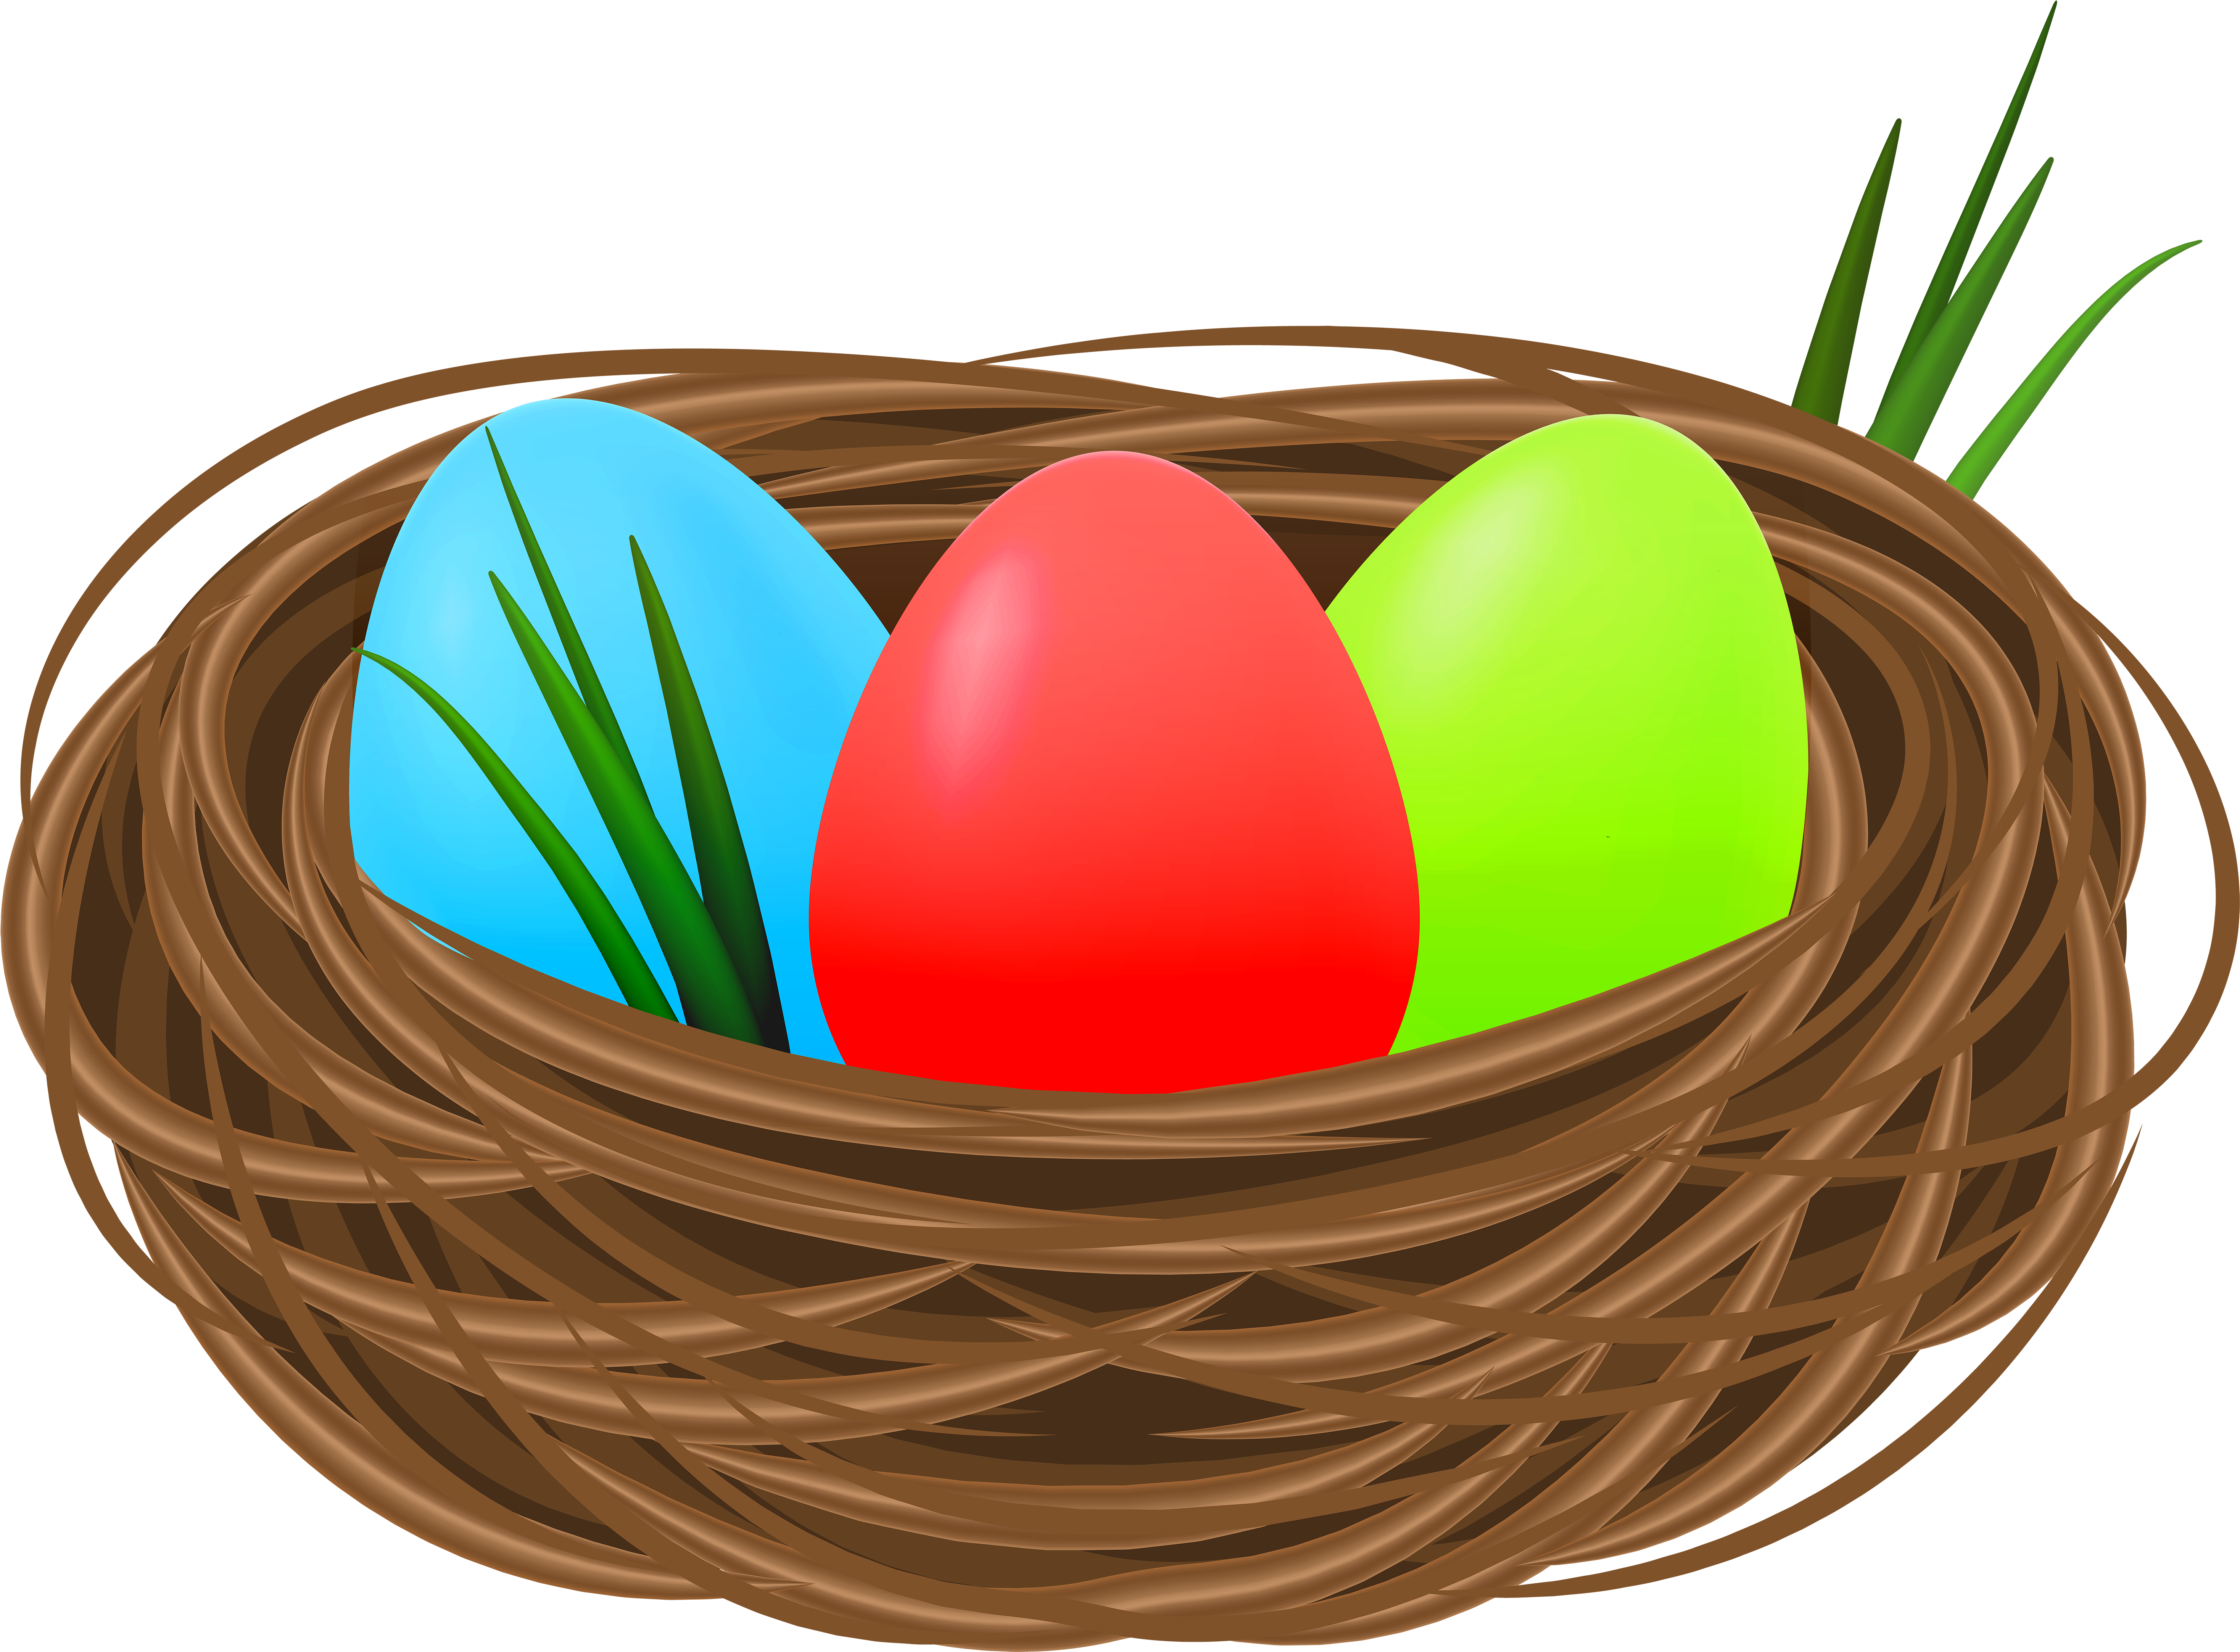 Easter Eggs In Nest Decorative Transparent Image - Easter Eggs In Nest Decorative Transparent Image (6000x4425)